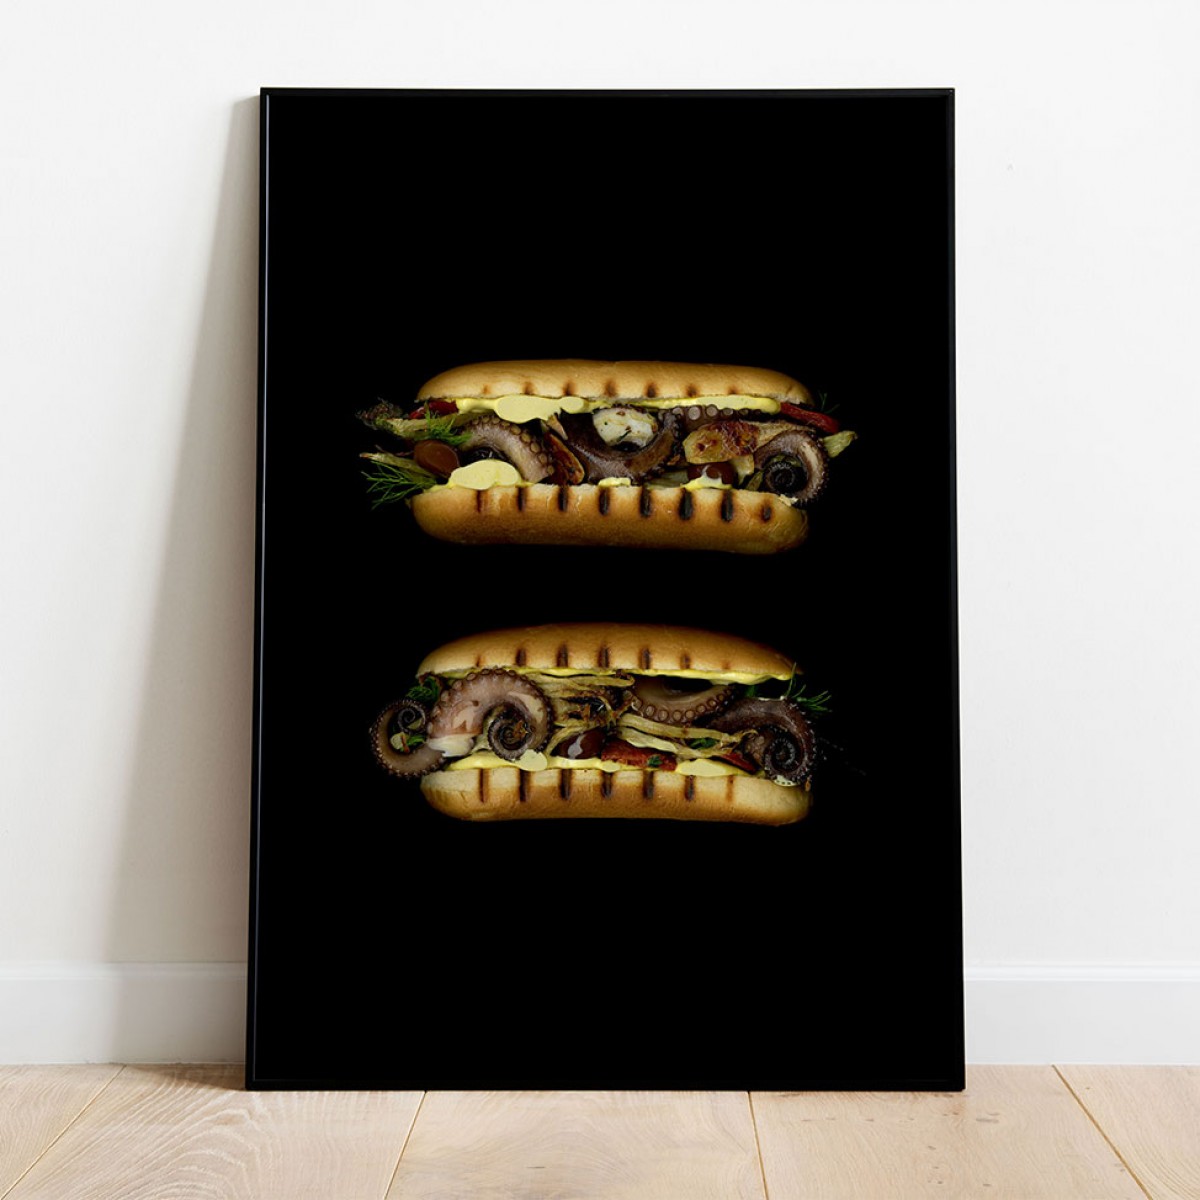 
Pulpo-Sandwich
Poster/Kunstdruck A3